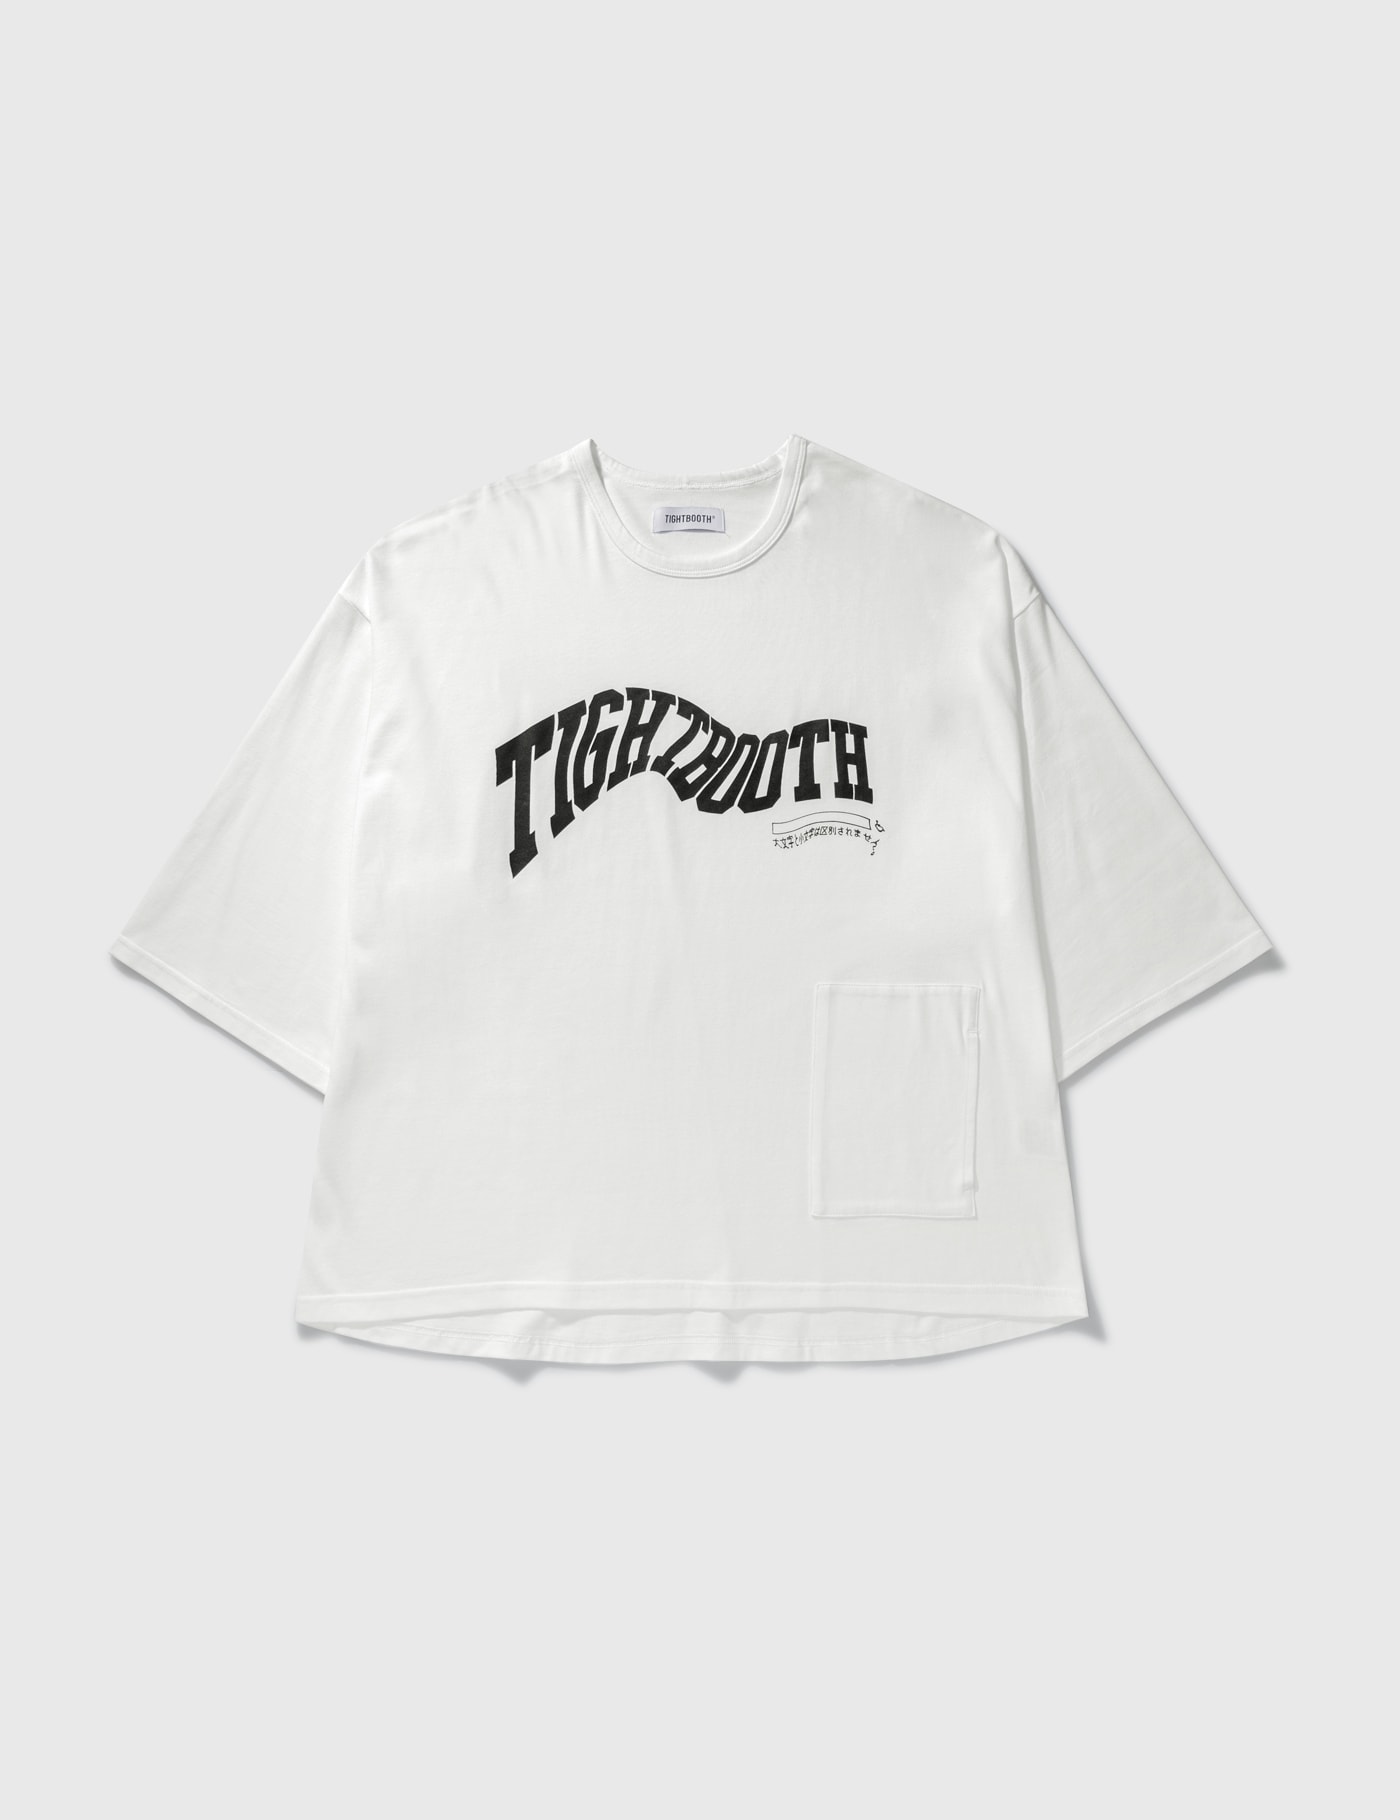 Tightbooth Acid Logo 7 T-shirt In White